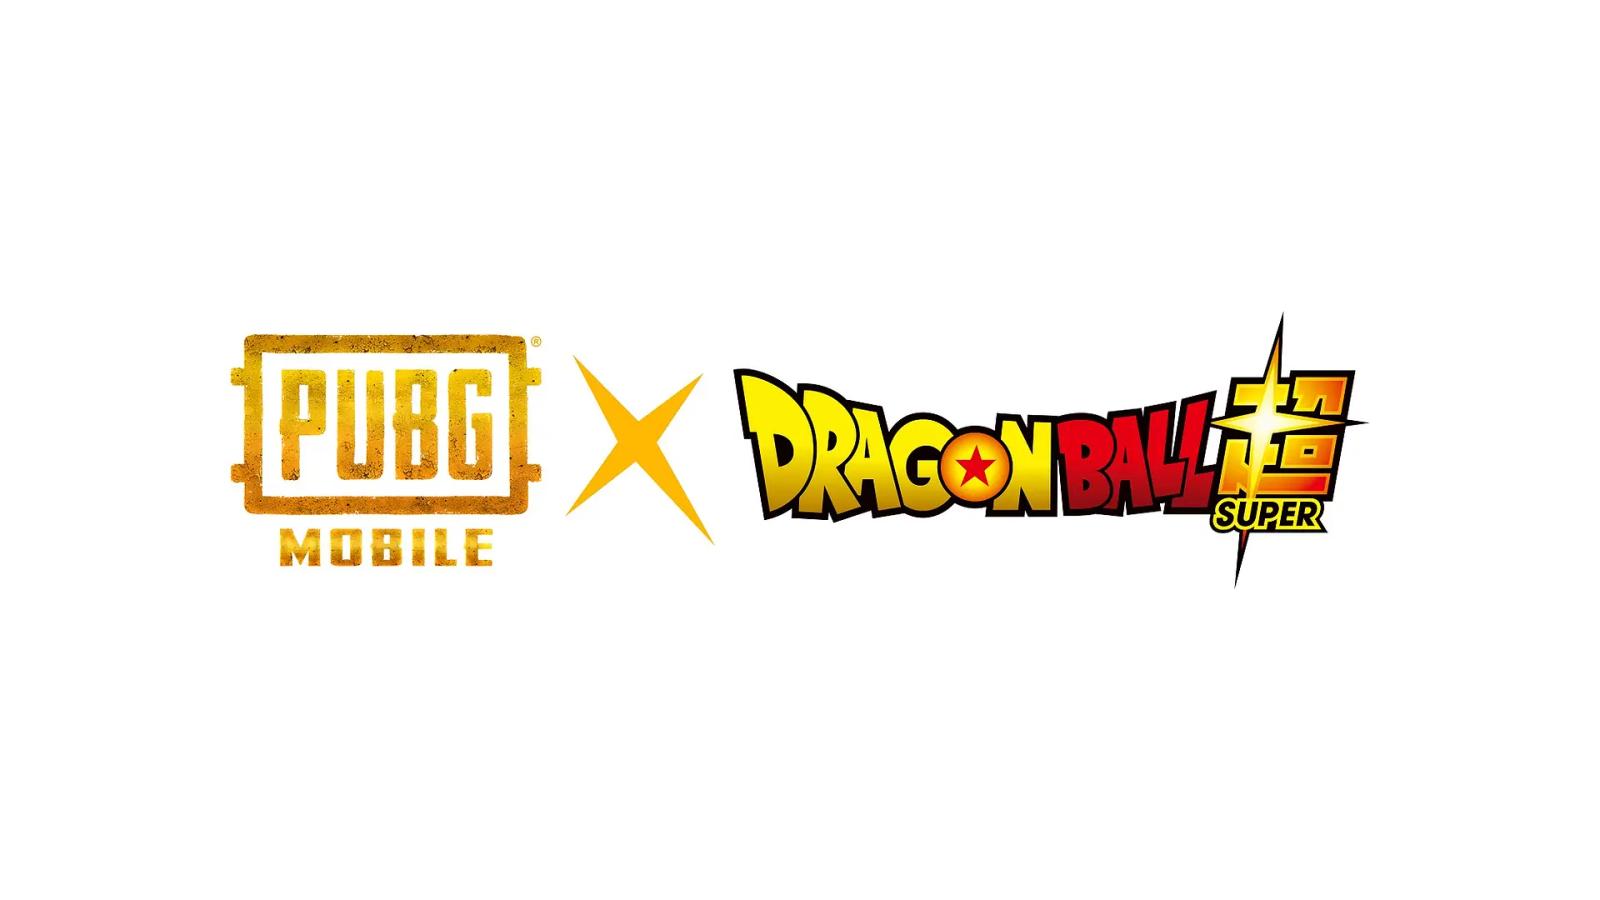 PUBG x Dragon Ball Super